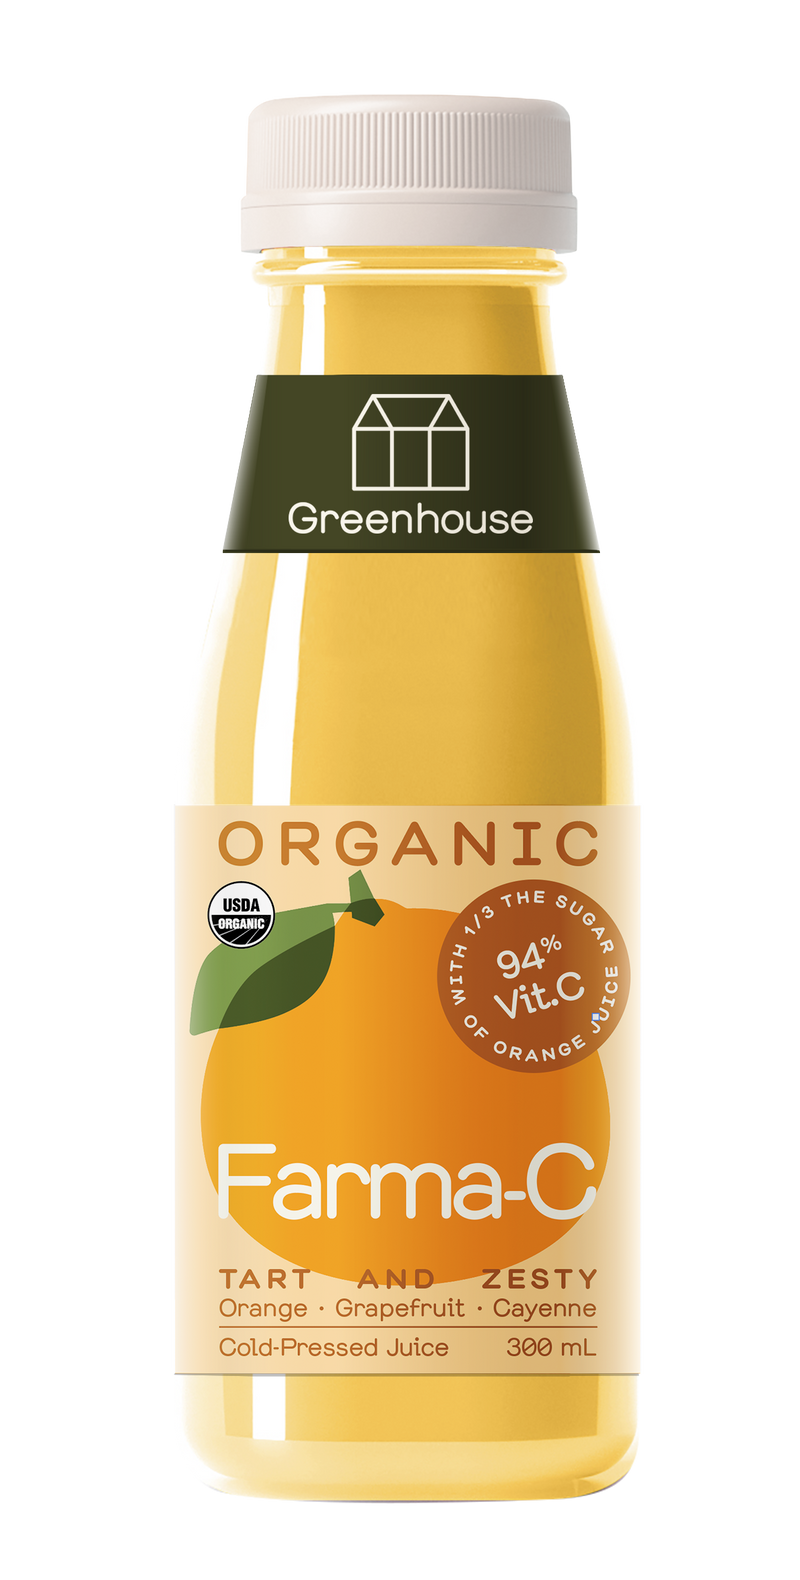 Greenhouse Juice - Farma-C 300ml